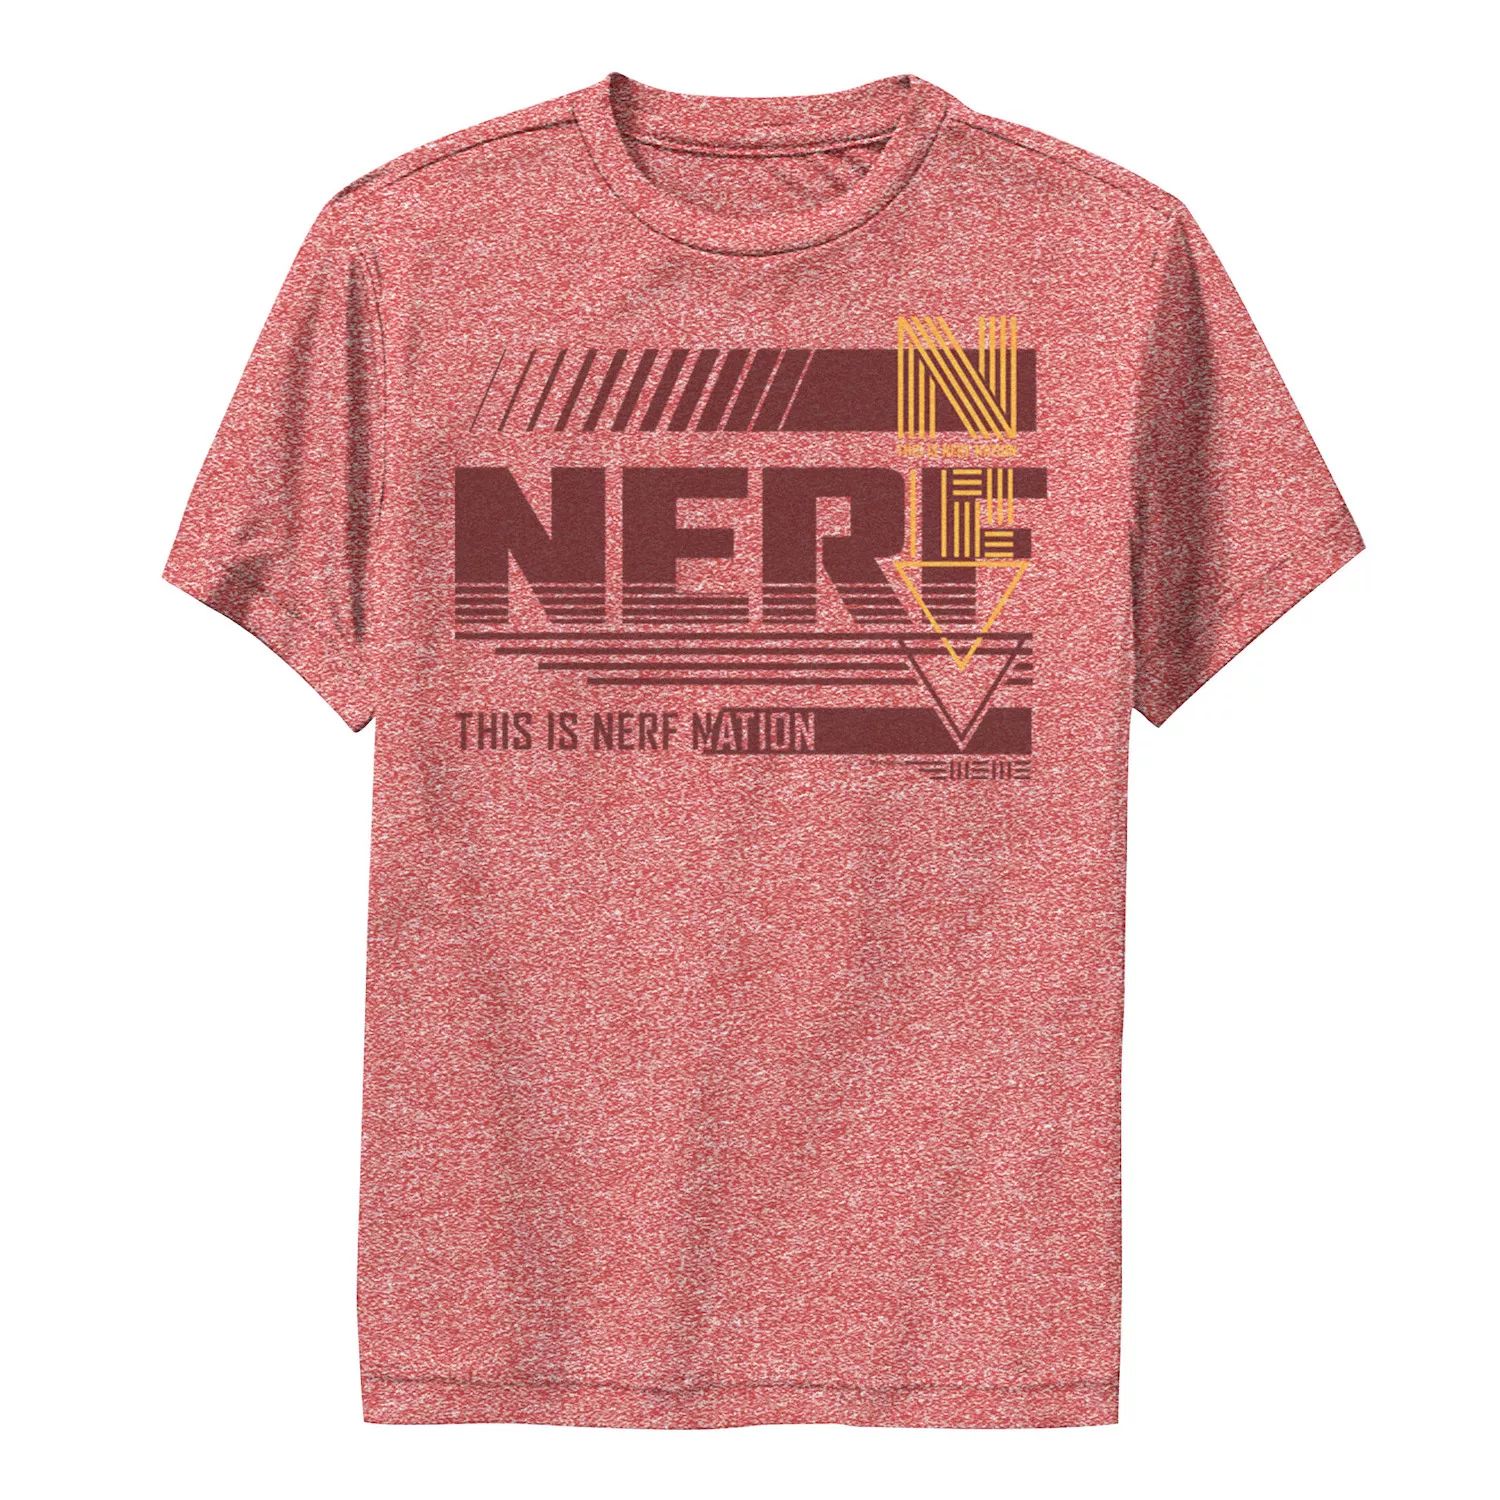 Футболка с графикой Nerf This Is Nerf Nation Mashup для мальчиков 8–20 лет Nerf толстовка с плакатом nerf this is nerf nation для мальчиков 8–20 лет nerf